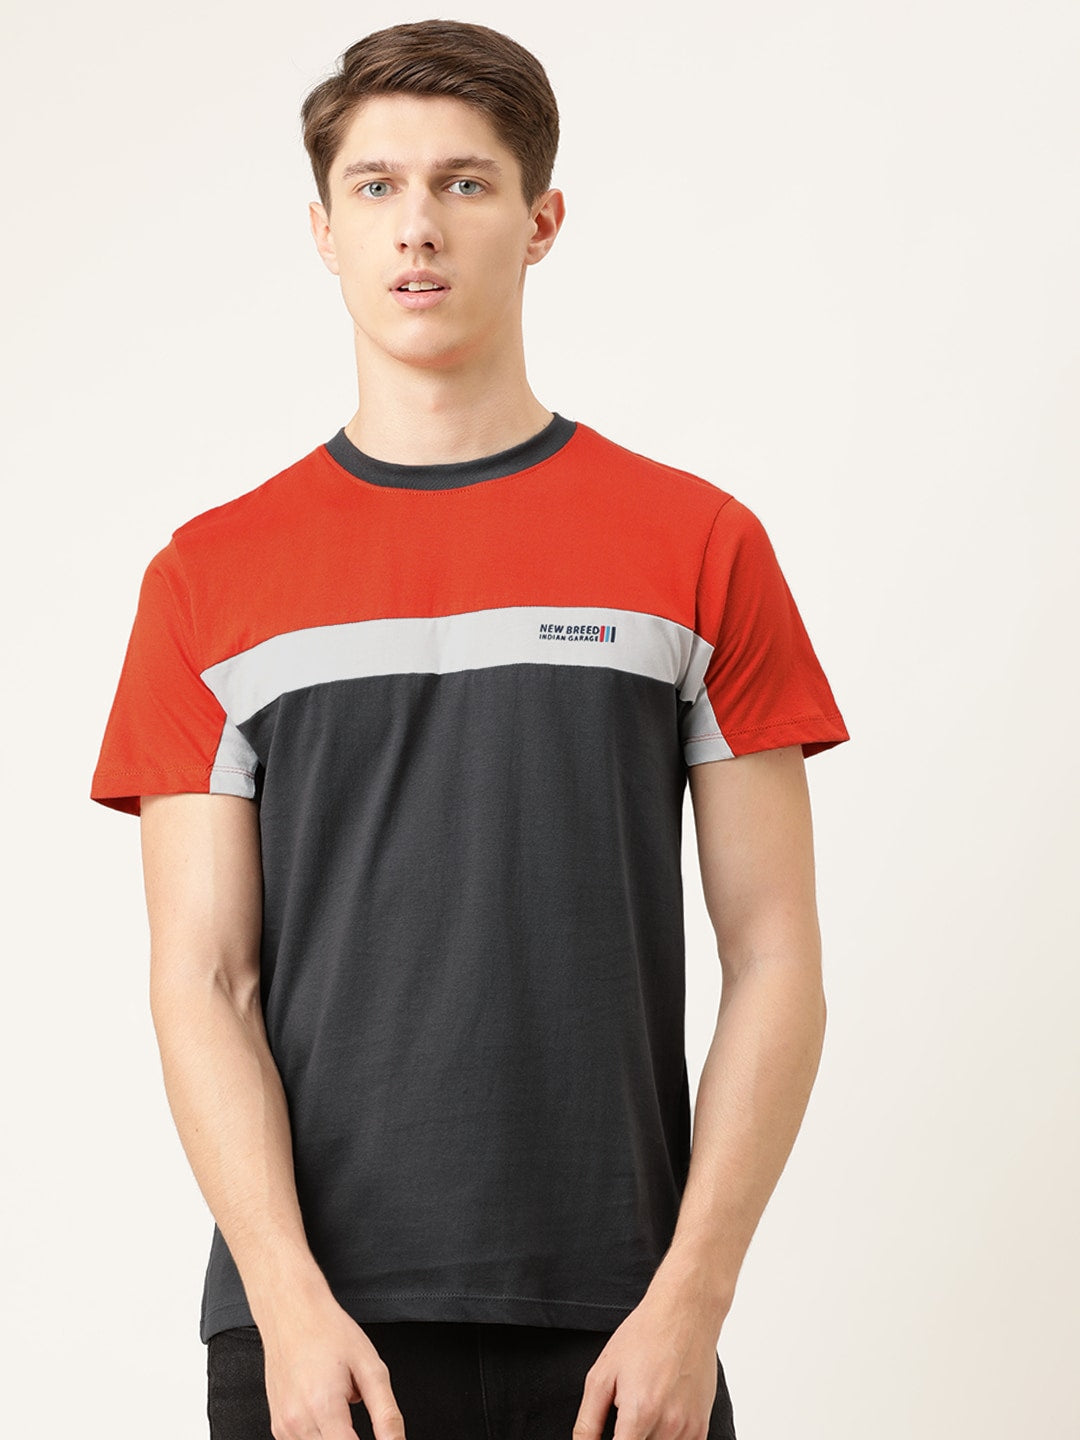 Shop Men Colourblocked Tshirts Online.